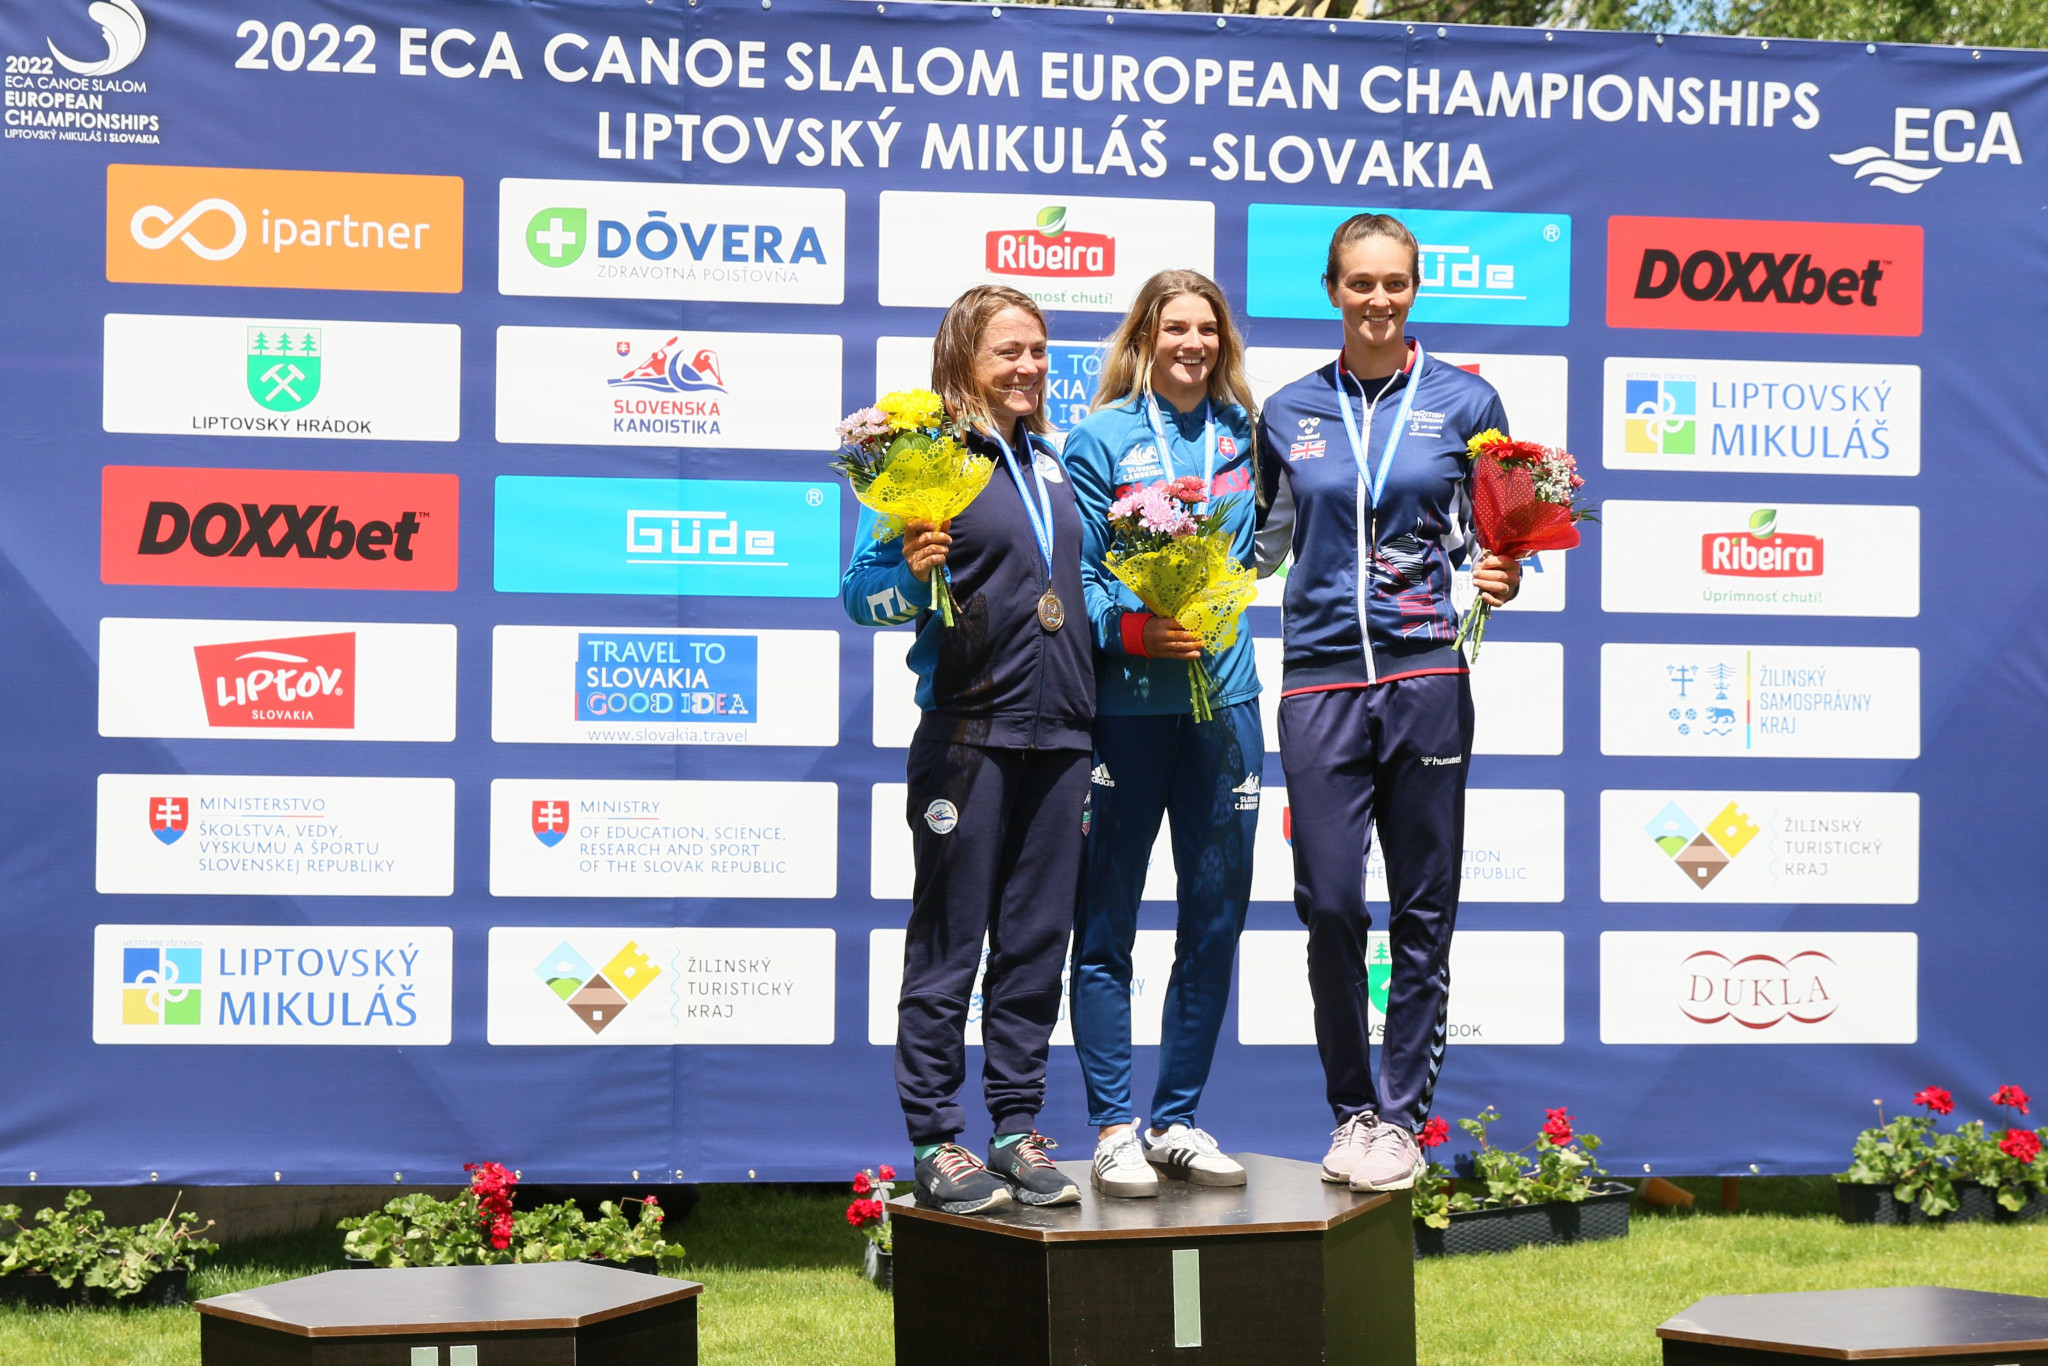 Italy's Stefanie Horn, left, and Slovakia's Eliška Mintálová, centre, both finished in 1:47.24 to take women's K1 gold at the ECA Canoe Slalom European Championships ©ECA